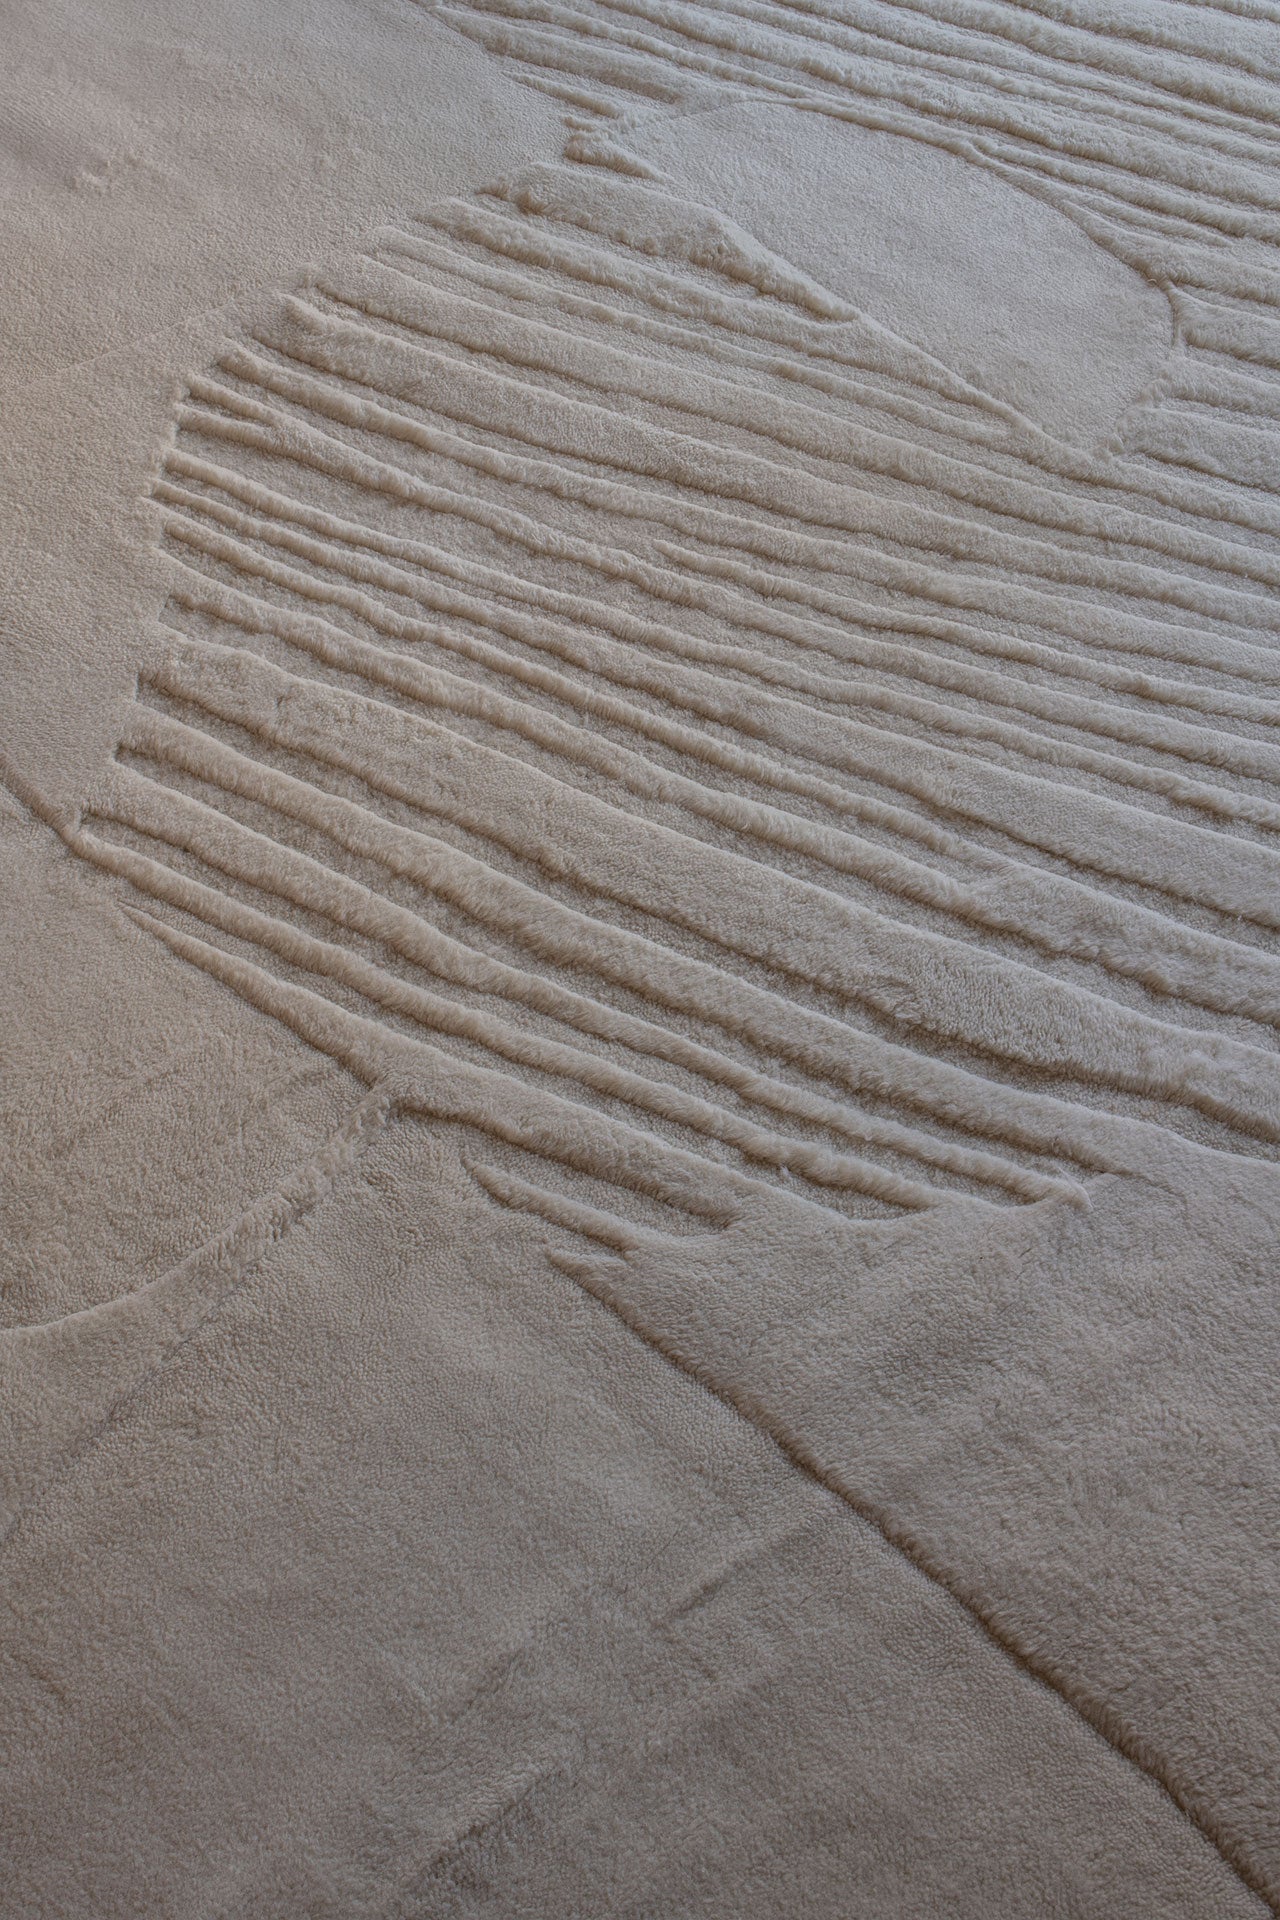 Layered Artisan Guild Bone White wool vloerkleed